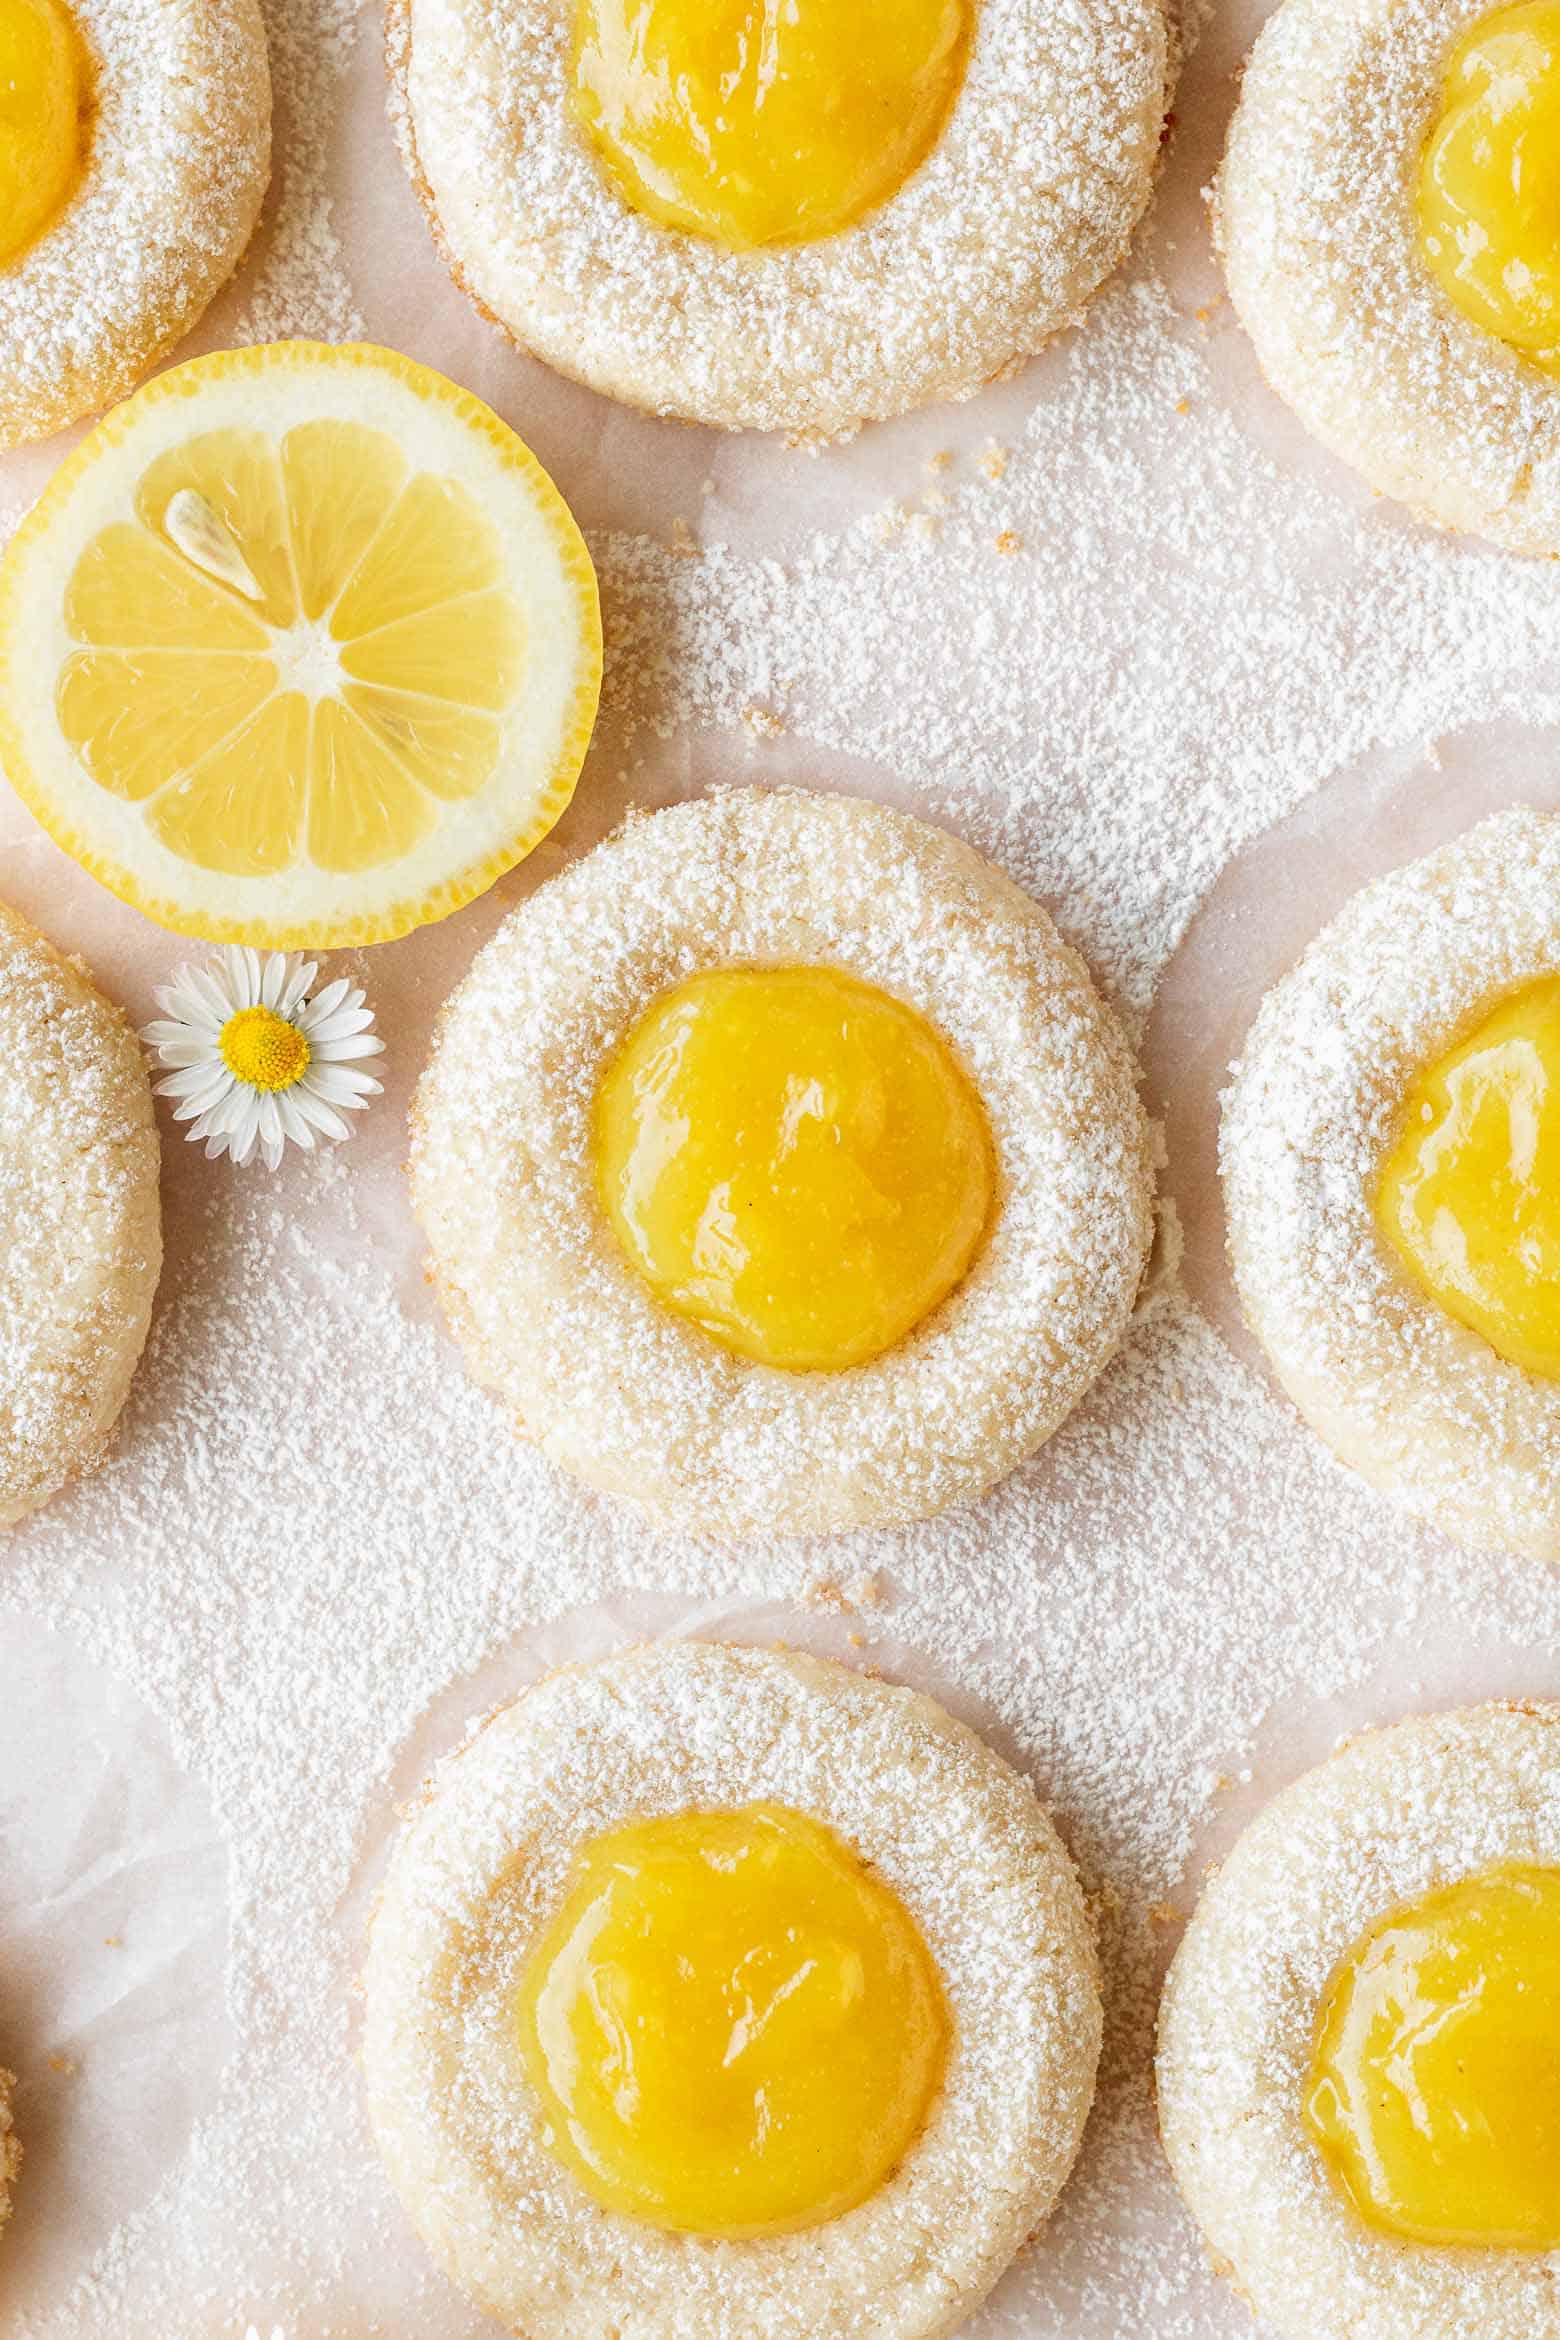 Vegan lemon thumbprint cookies with a slice of lemon